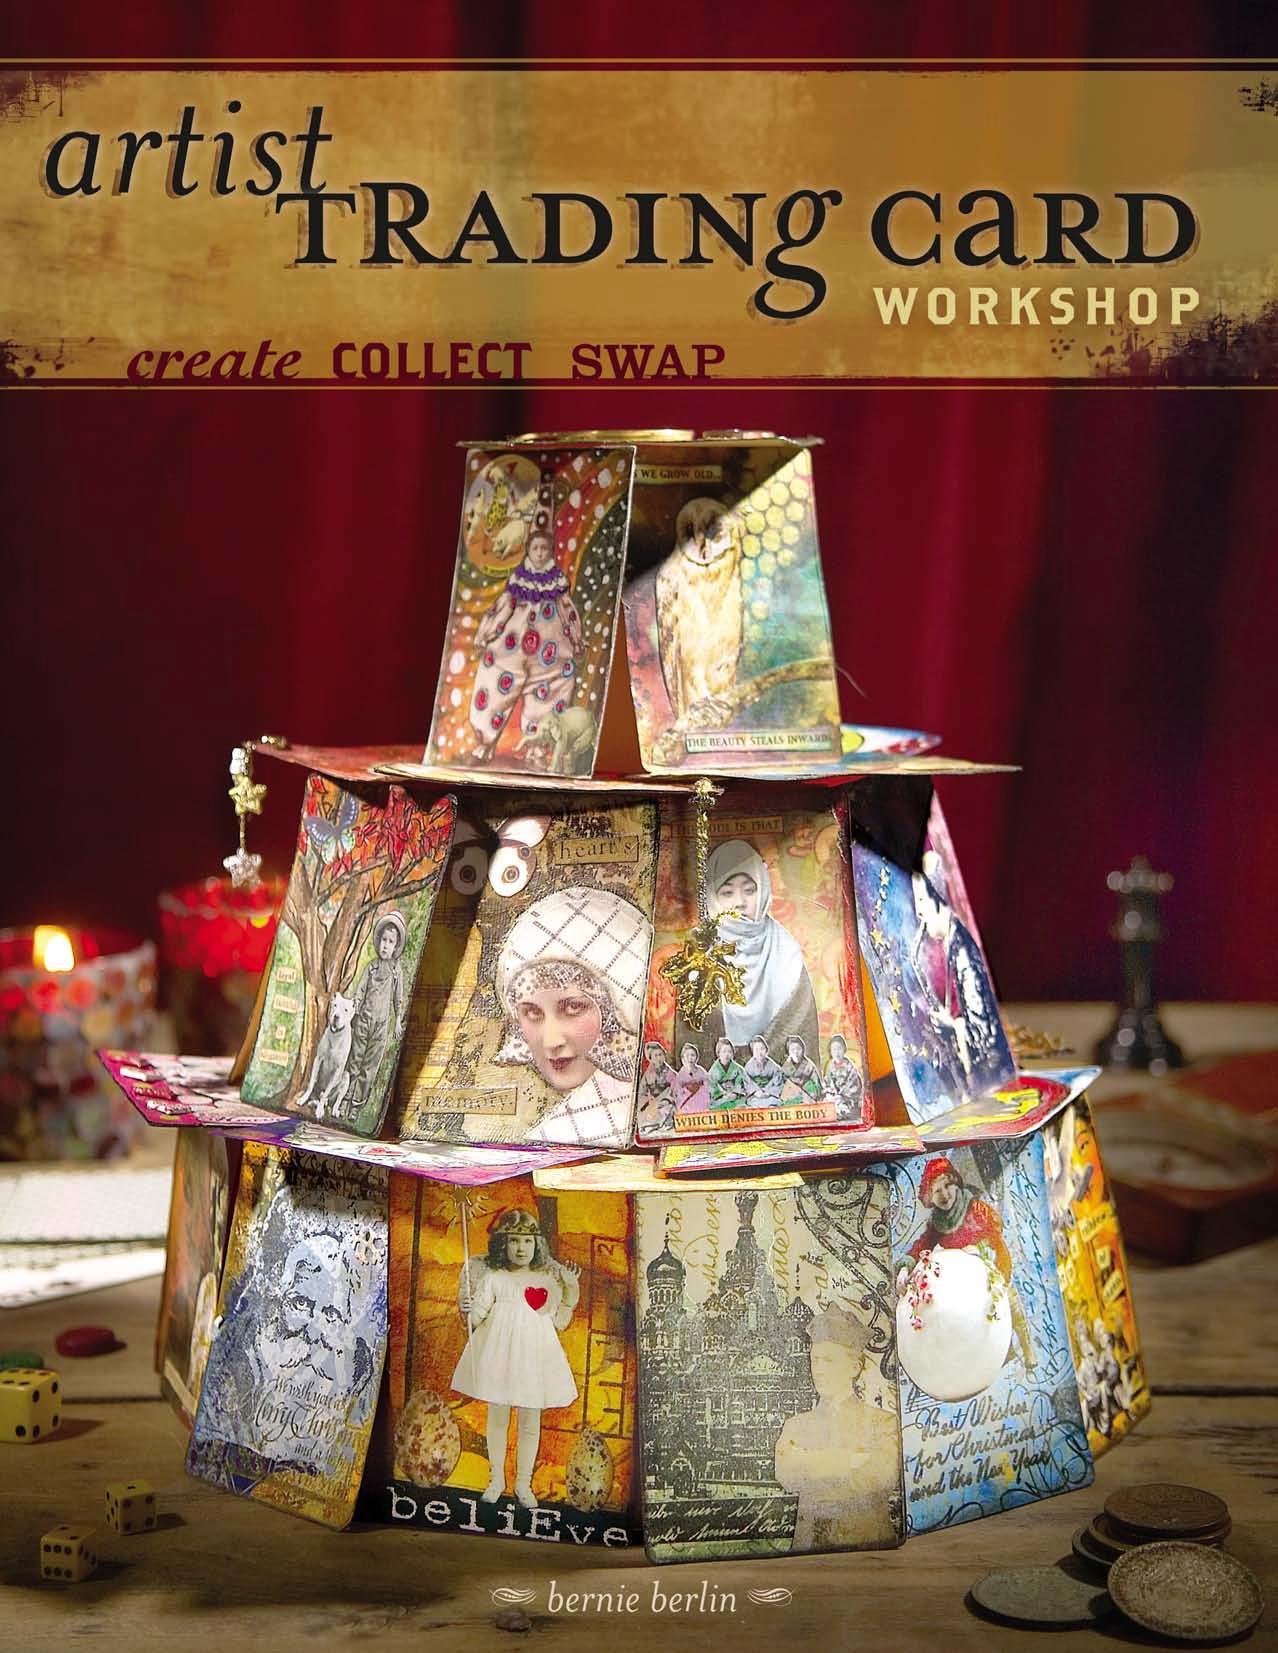 Artist Trading Card Workshop: Create, Collect, Swap by Bernie Berlin